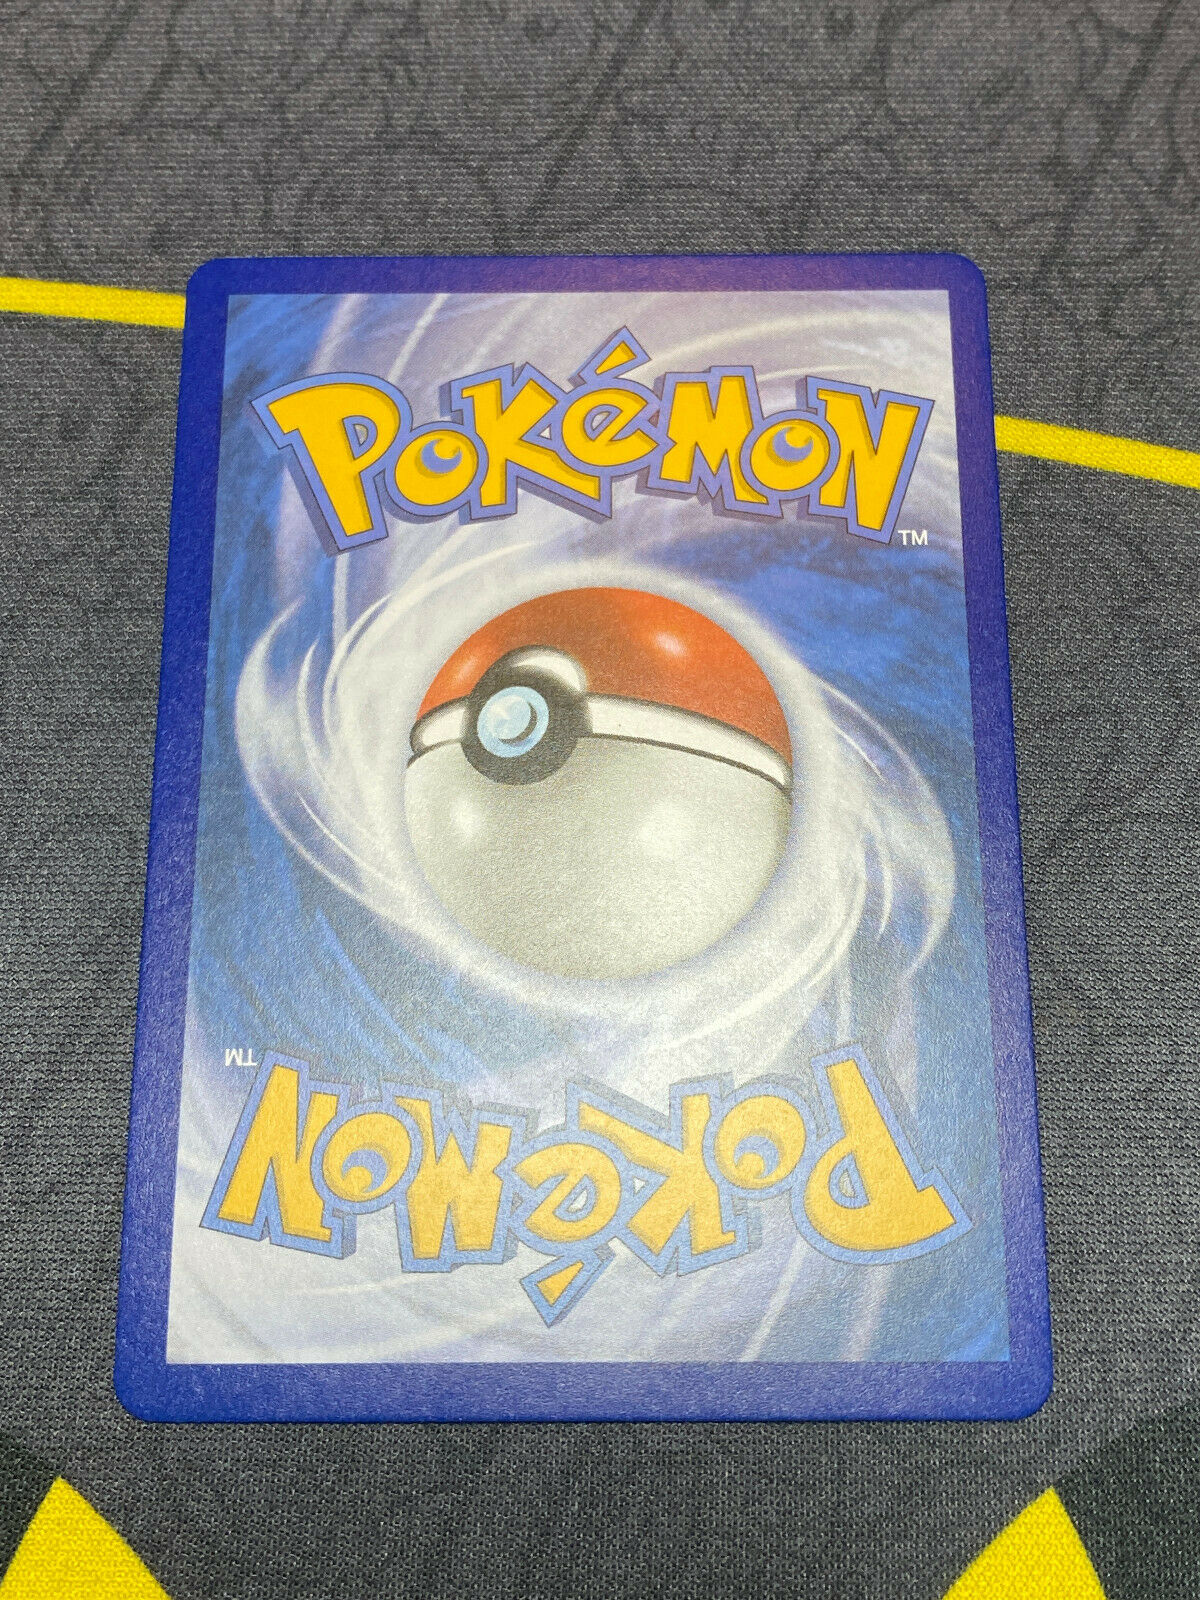 Pokémon Celebrations Imposter Professor Oak 73/102 Holo Rare Collection Card NM